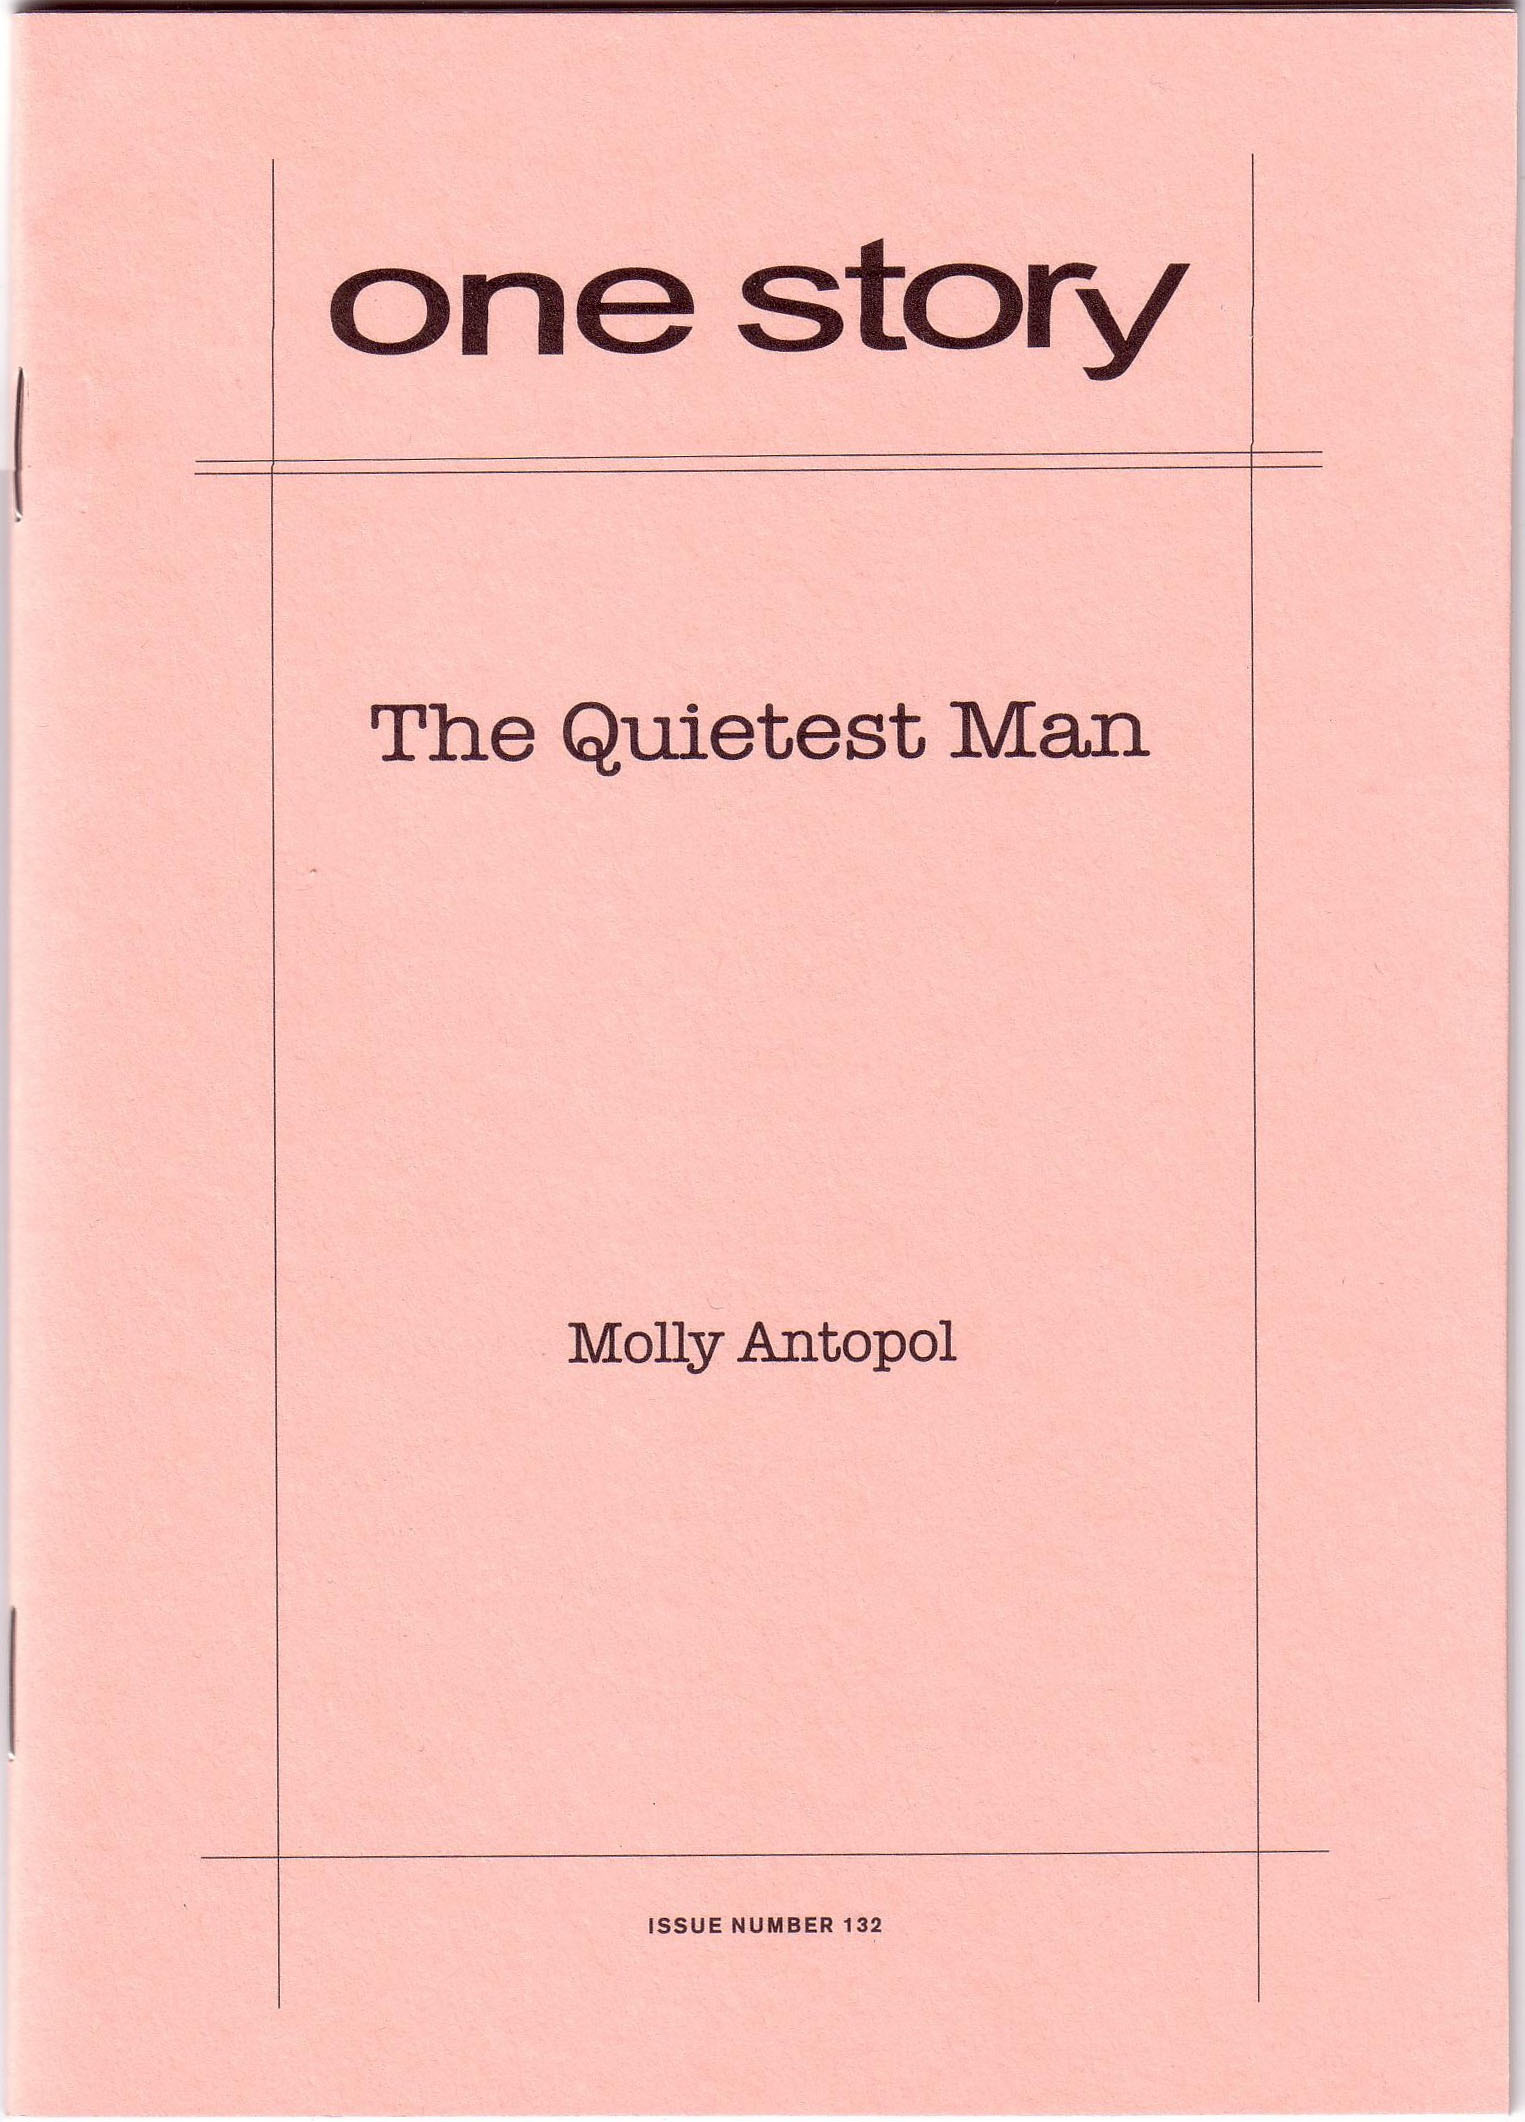 The Quietest Man Cover